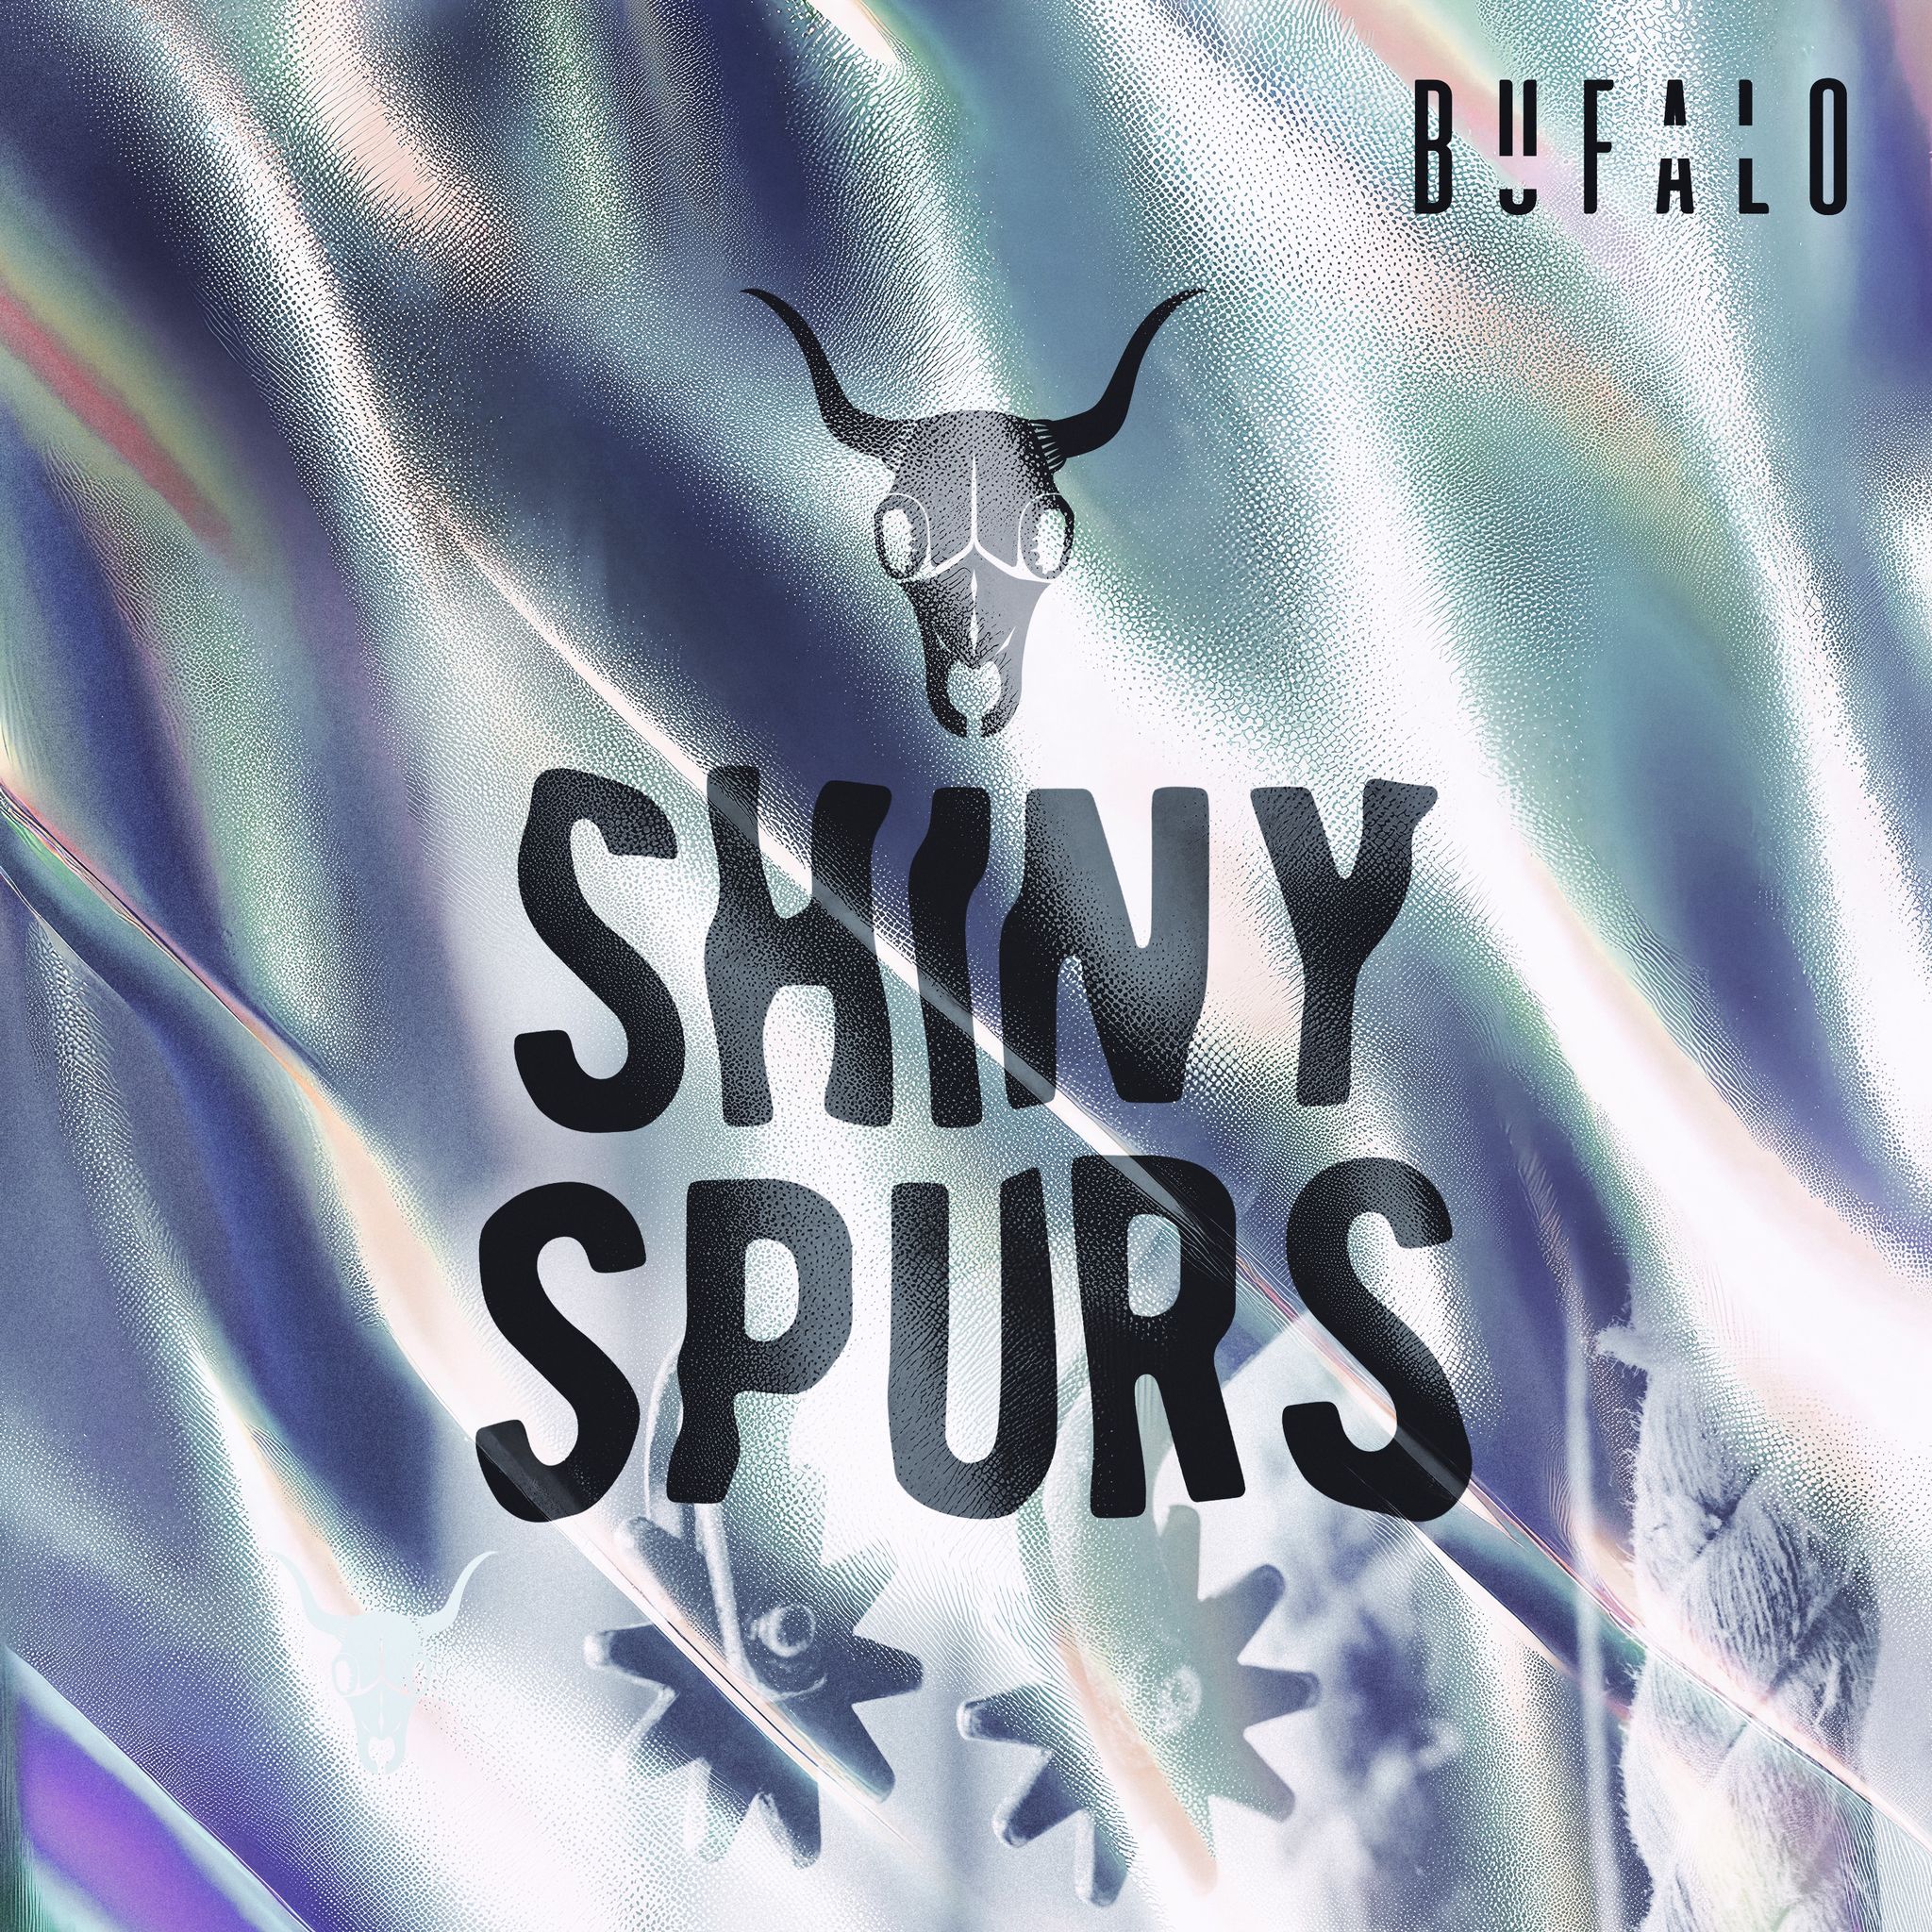 Bufalo - Shiny Spurs - BOTV Skull Staking 2